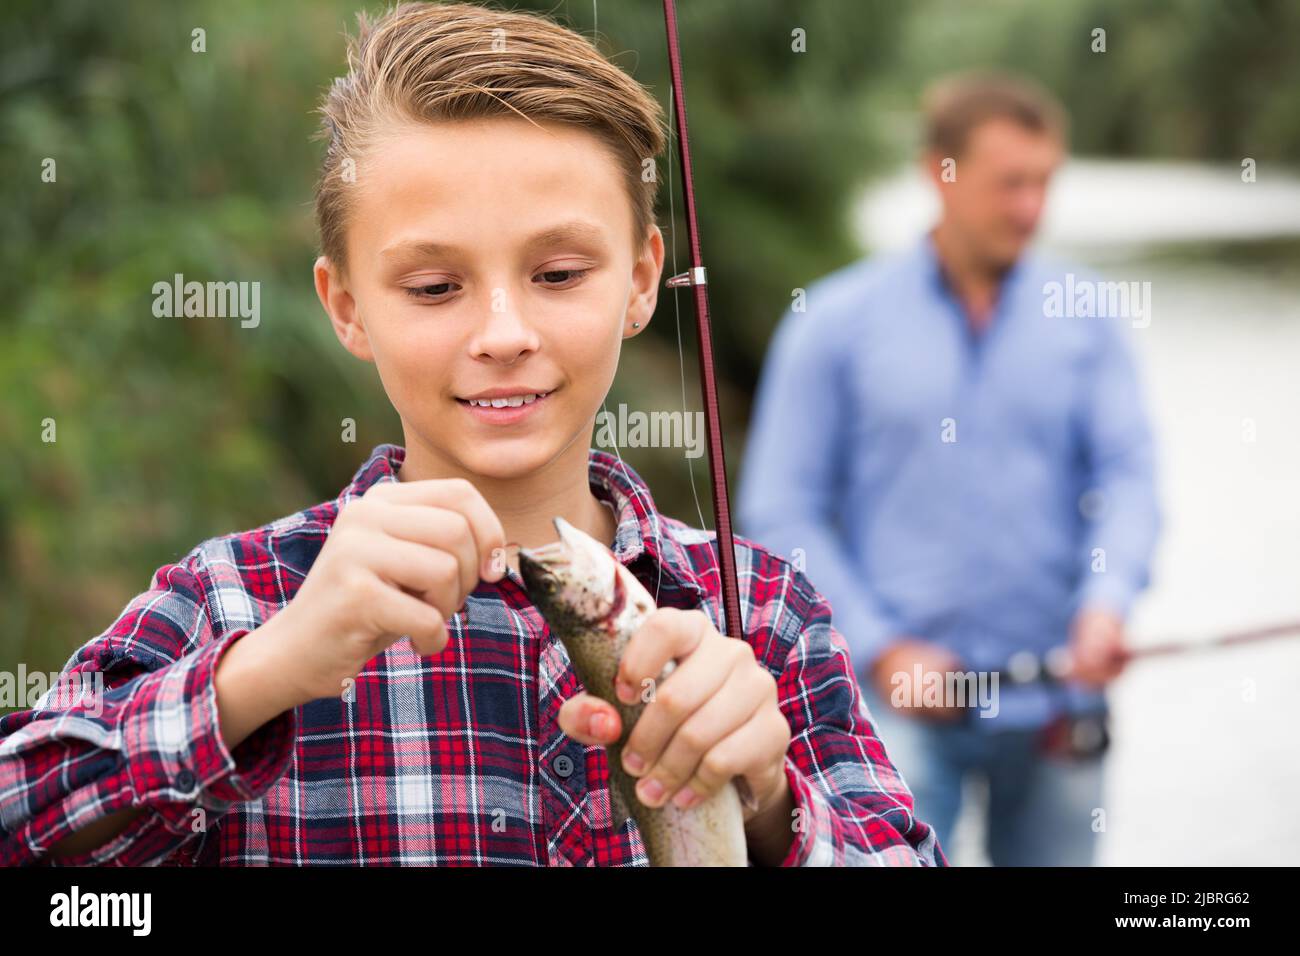 teenager boy holding catch fish on hook . Stock Photo